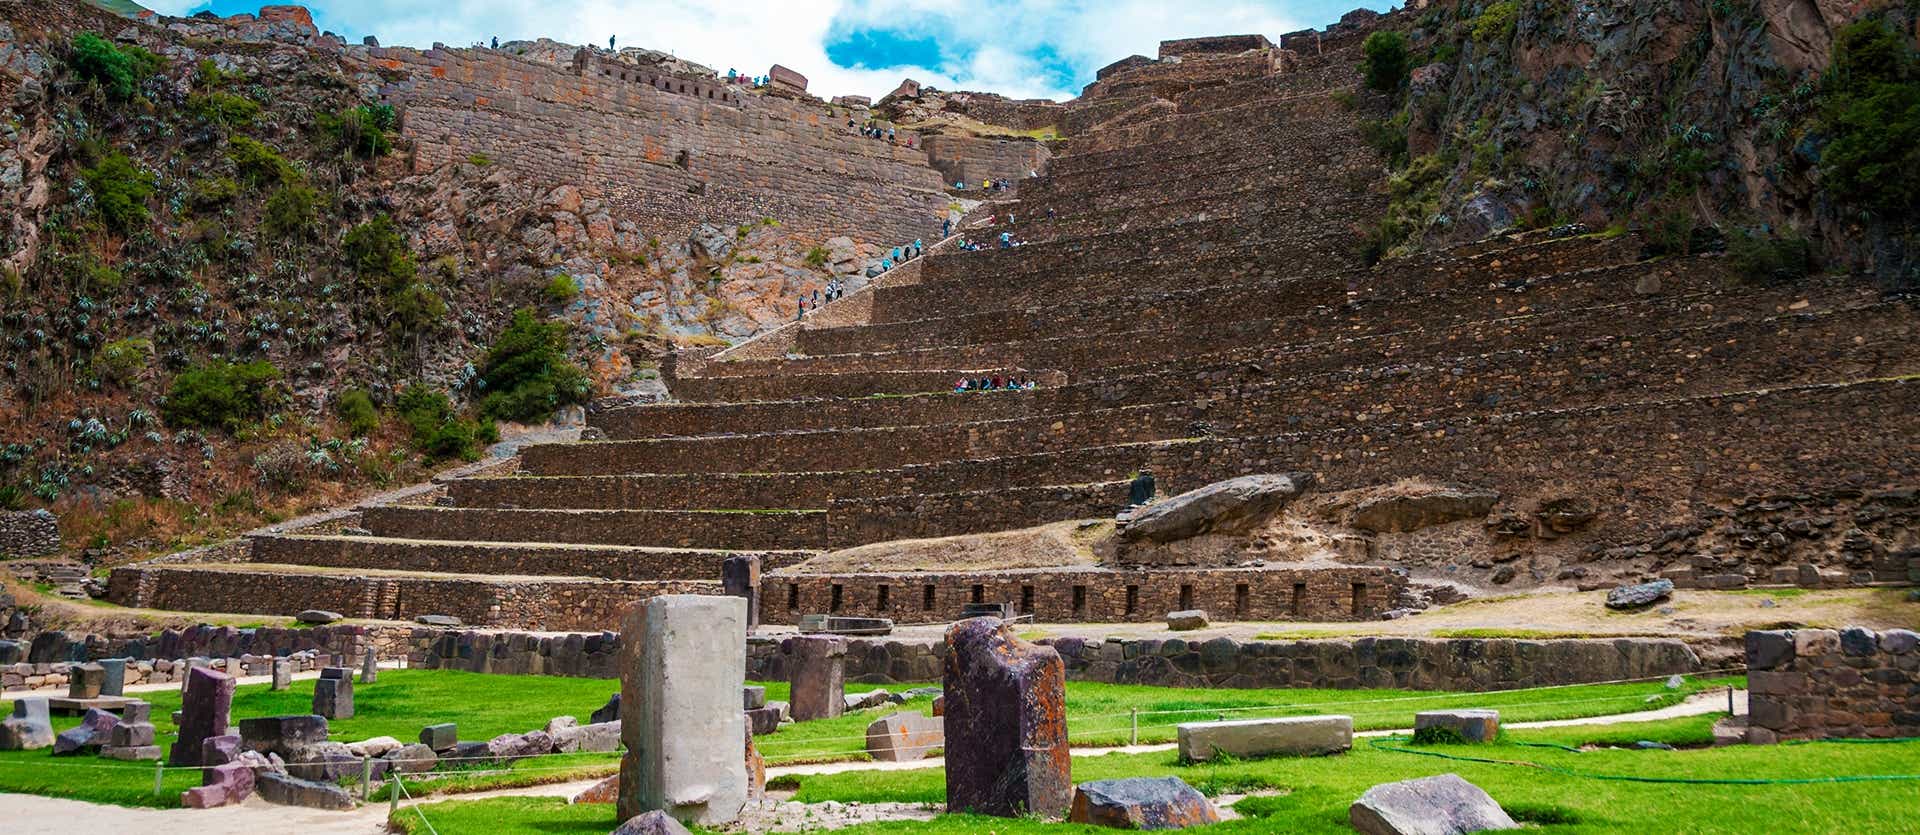  Ancient Inca Ruins Of Ollantaytambo <span class="iconos separador"></span> Peru